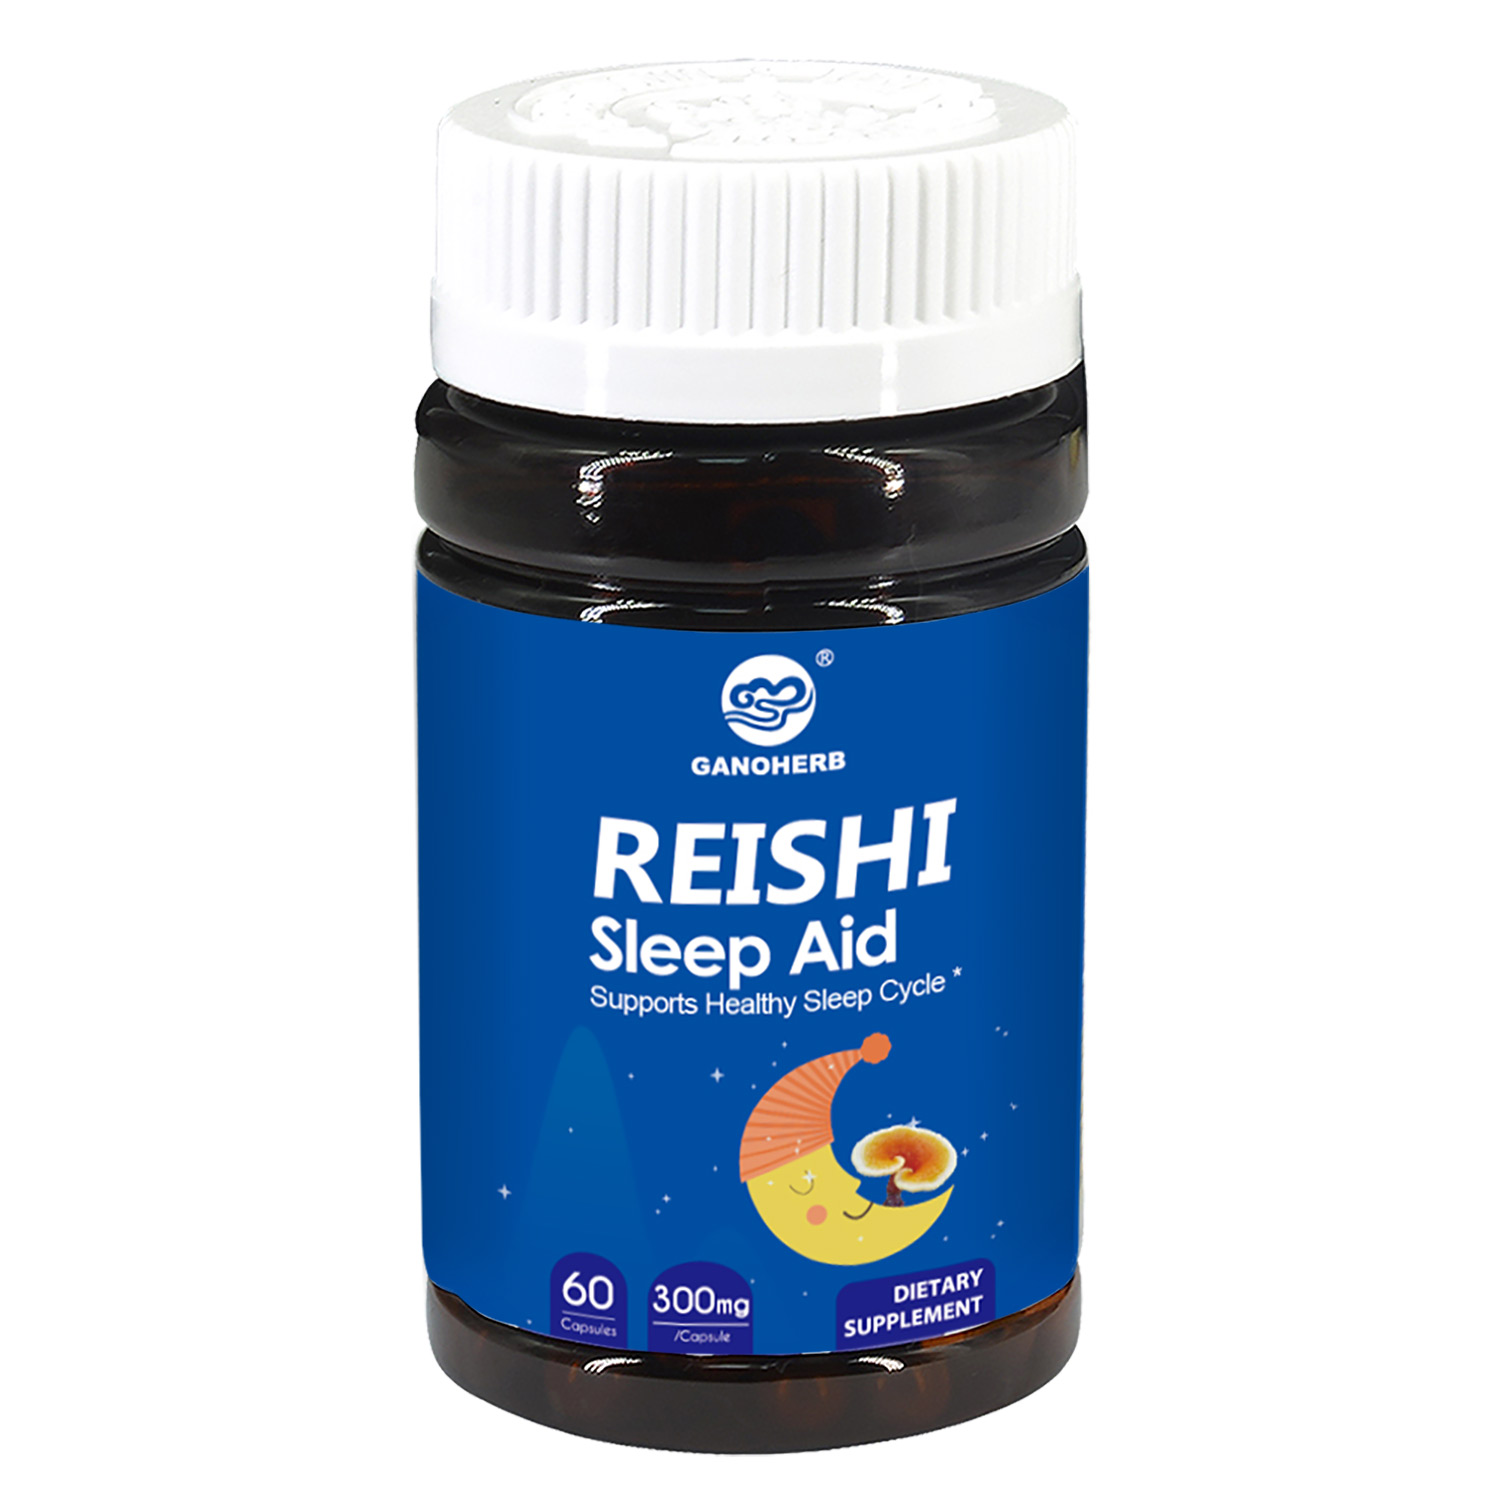 China wholesale Reishi Mushroom Coffee - GANOHERB Reishi Mushroom Sleep Aid with Organic Ganoderma Spore Powde+Melatonin- Anxiety &Insomnia Relief, Non-GMO & Gluten Free,100% Natural,Non-H...